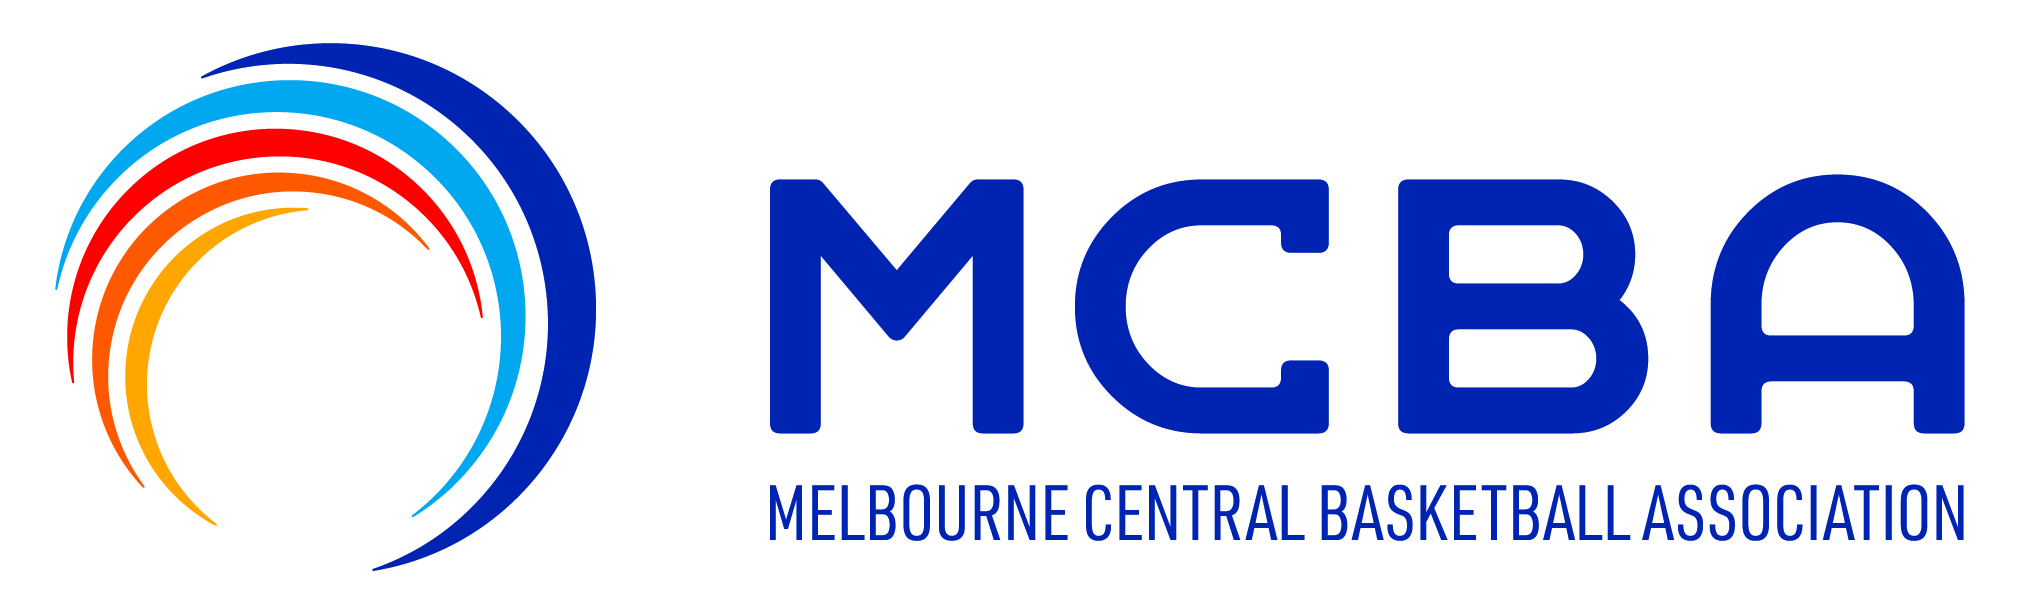 Melbourne Central Basketball Association Logo